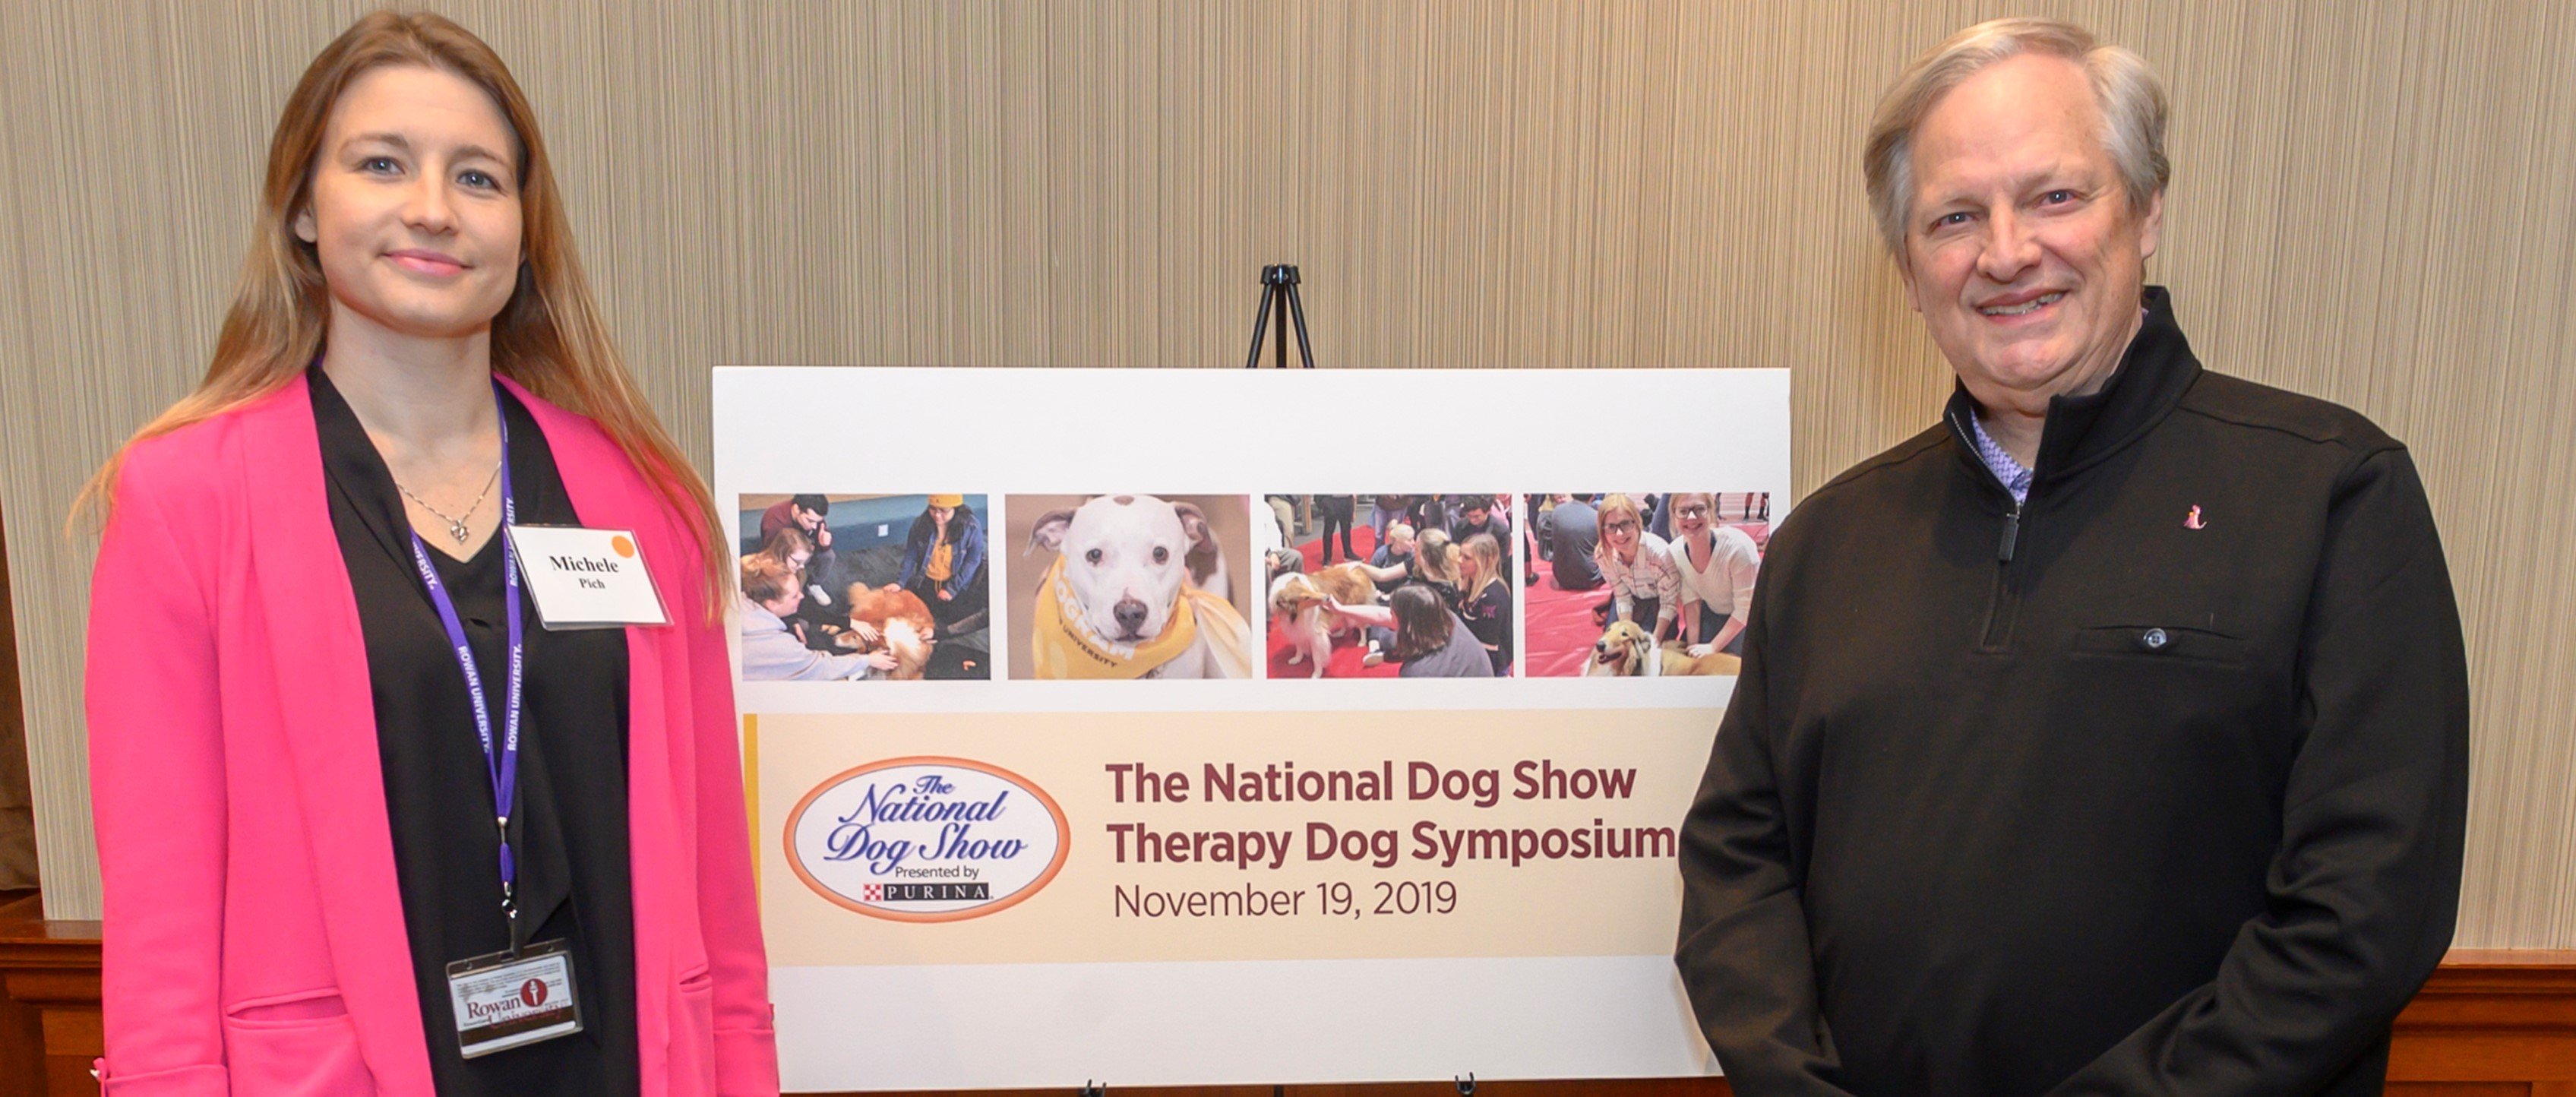 National Dog Show Therapy Dog Symposium 2020 (Virtual edition)